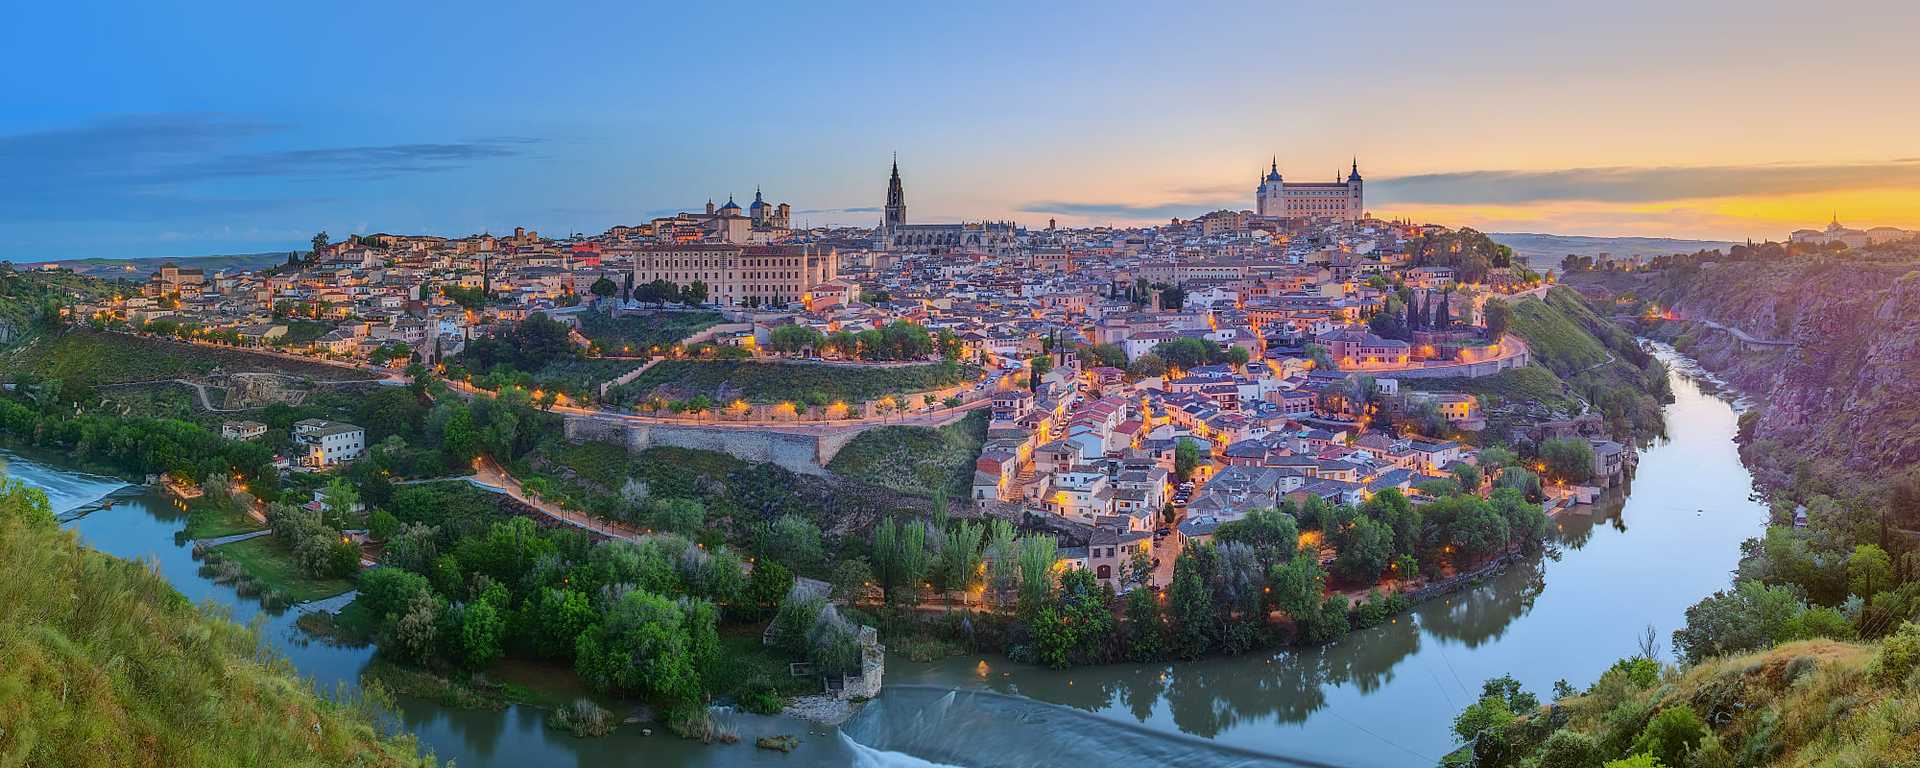 Alcazar on the hill over the Tagus river in Toledo, Spain